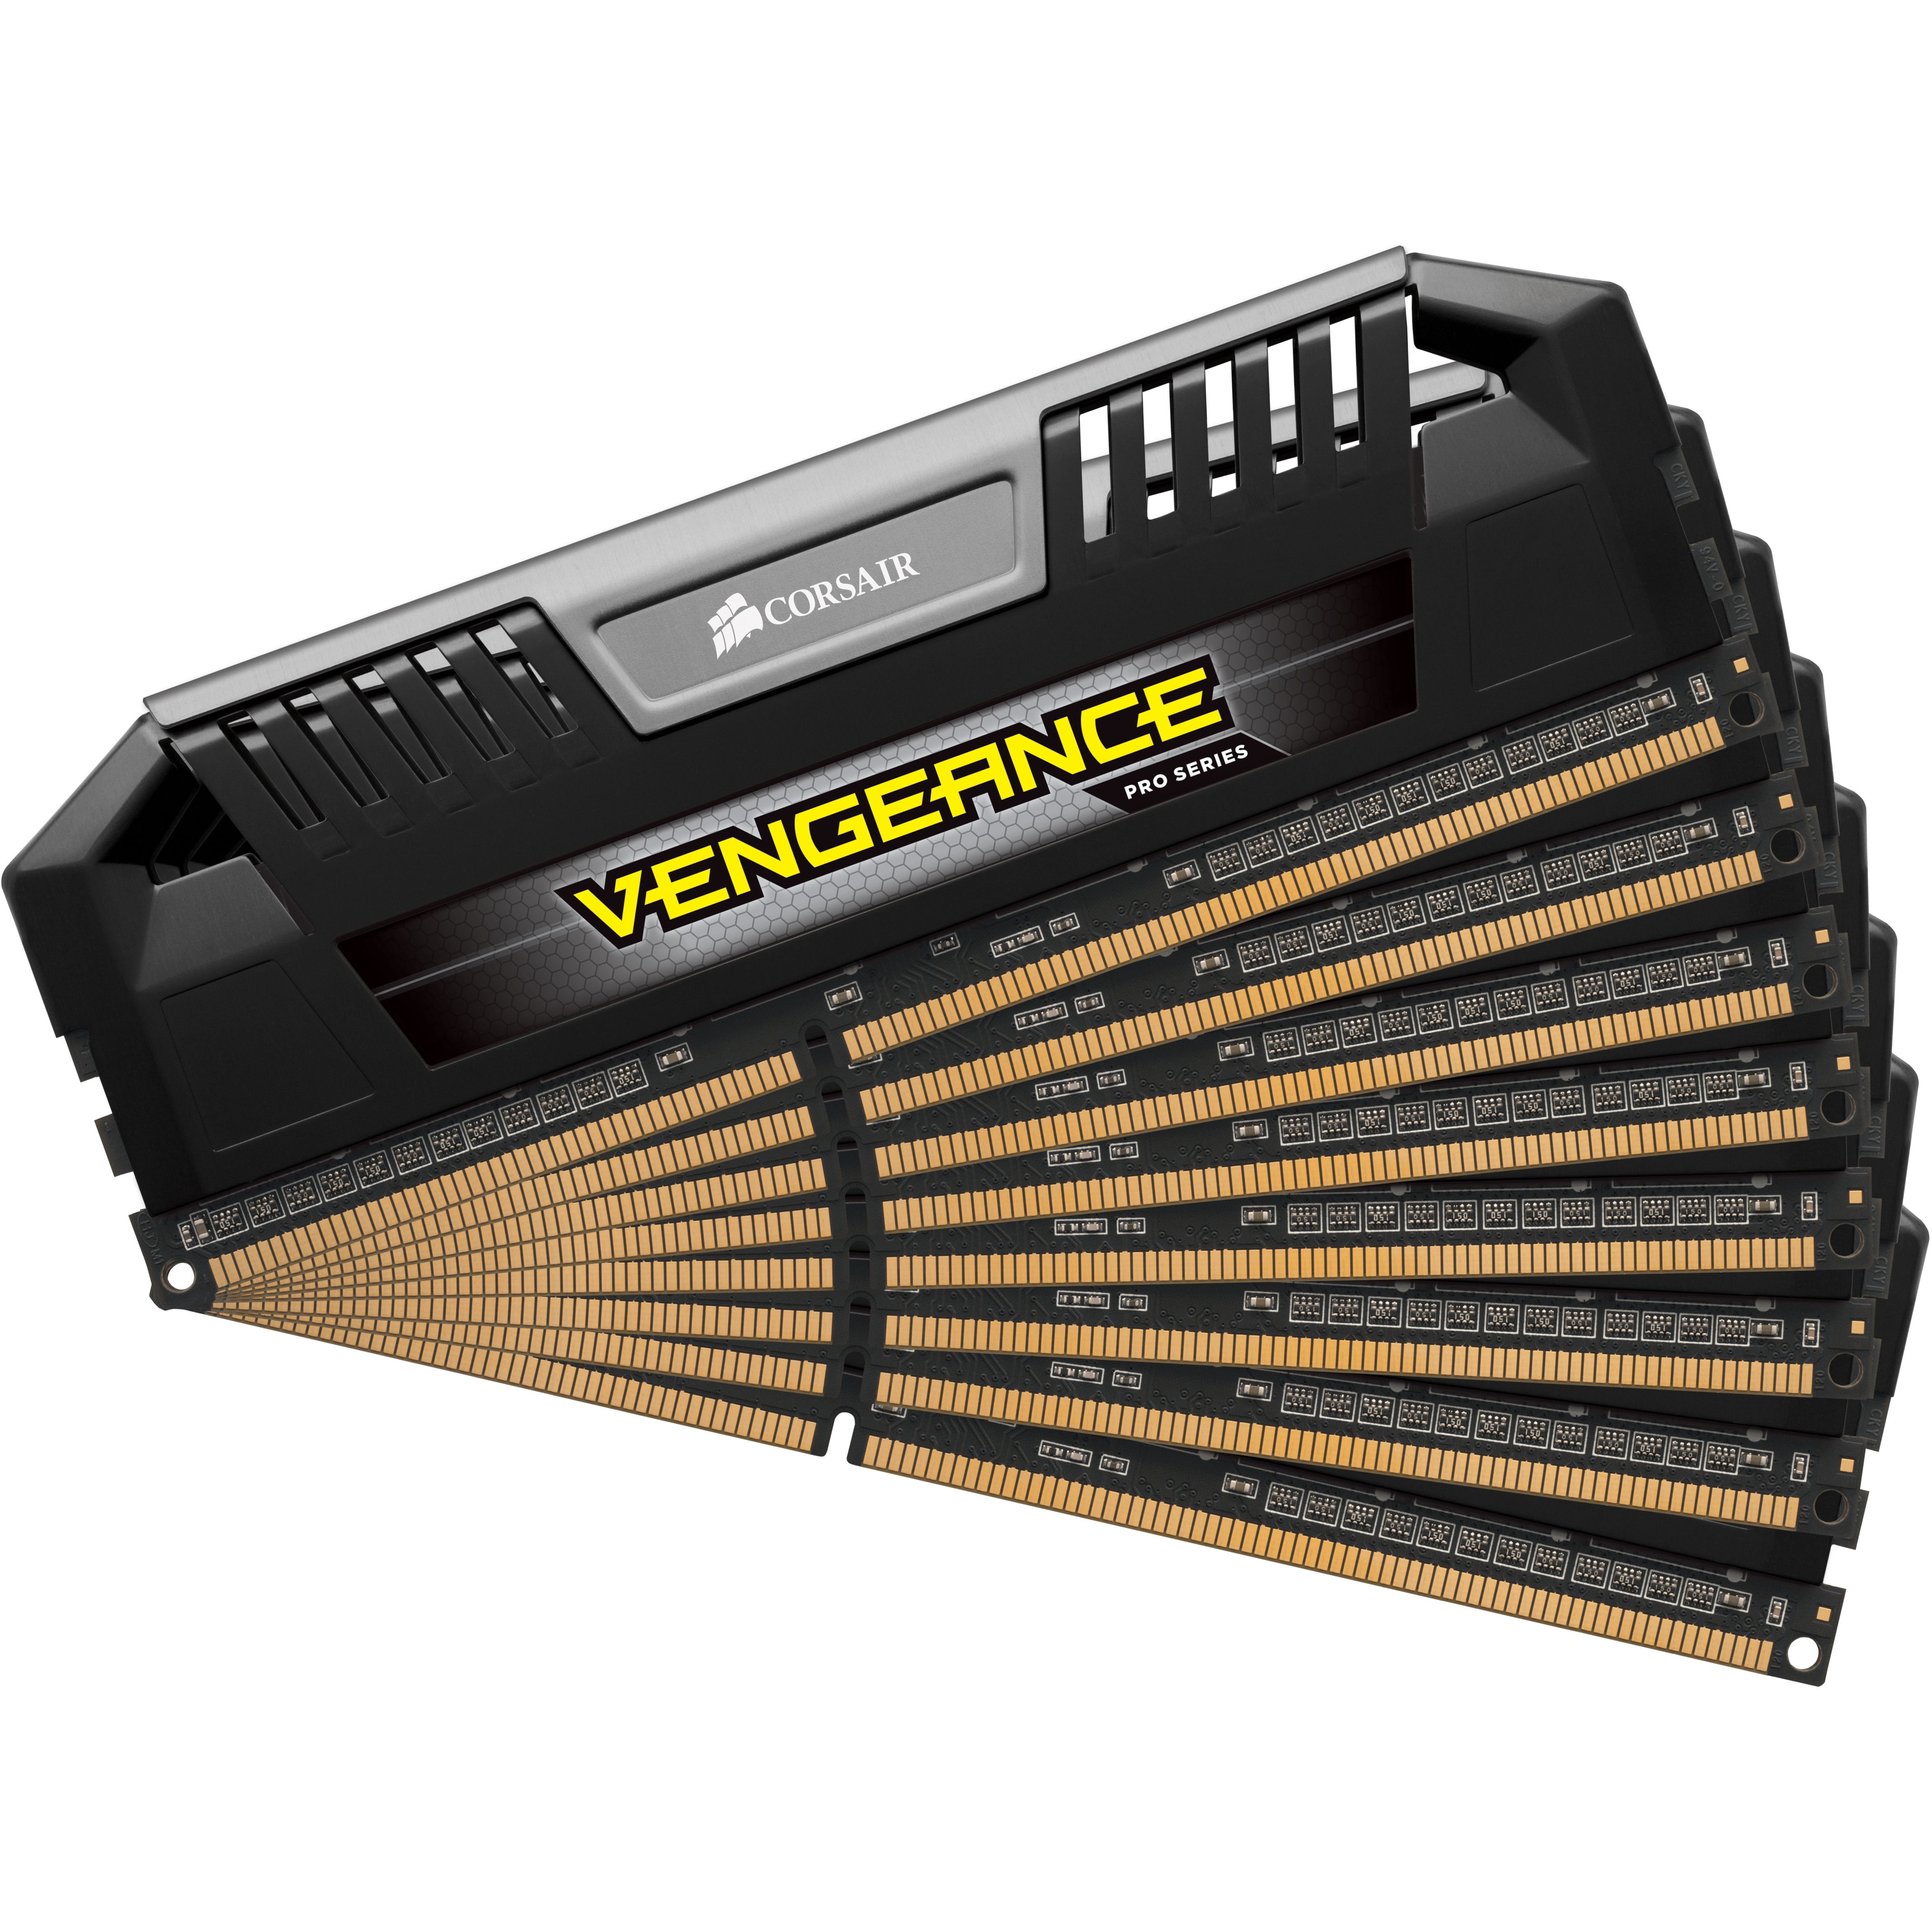 CORSAIR Vengeance Pro Series - DDR3 - 64 GB: 8 x 8 GB - DIMM 240-pin - 2133 MHz / PC3-17066 - 1.65 V - unbuffered - non-ECC - with Airflow II - Walmart.com